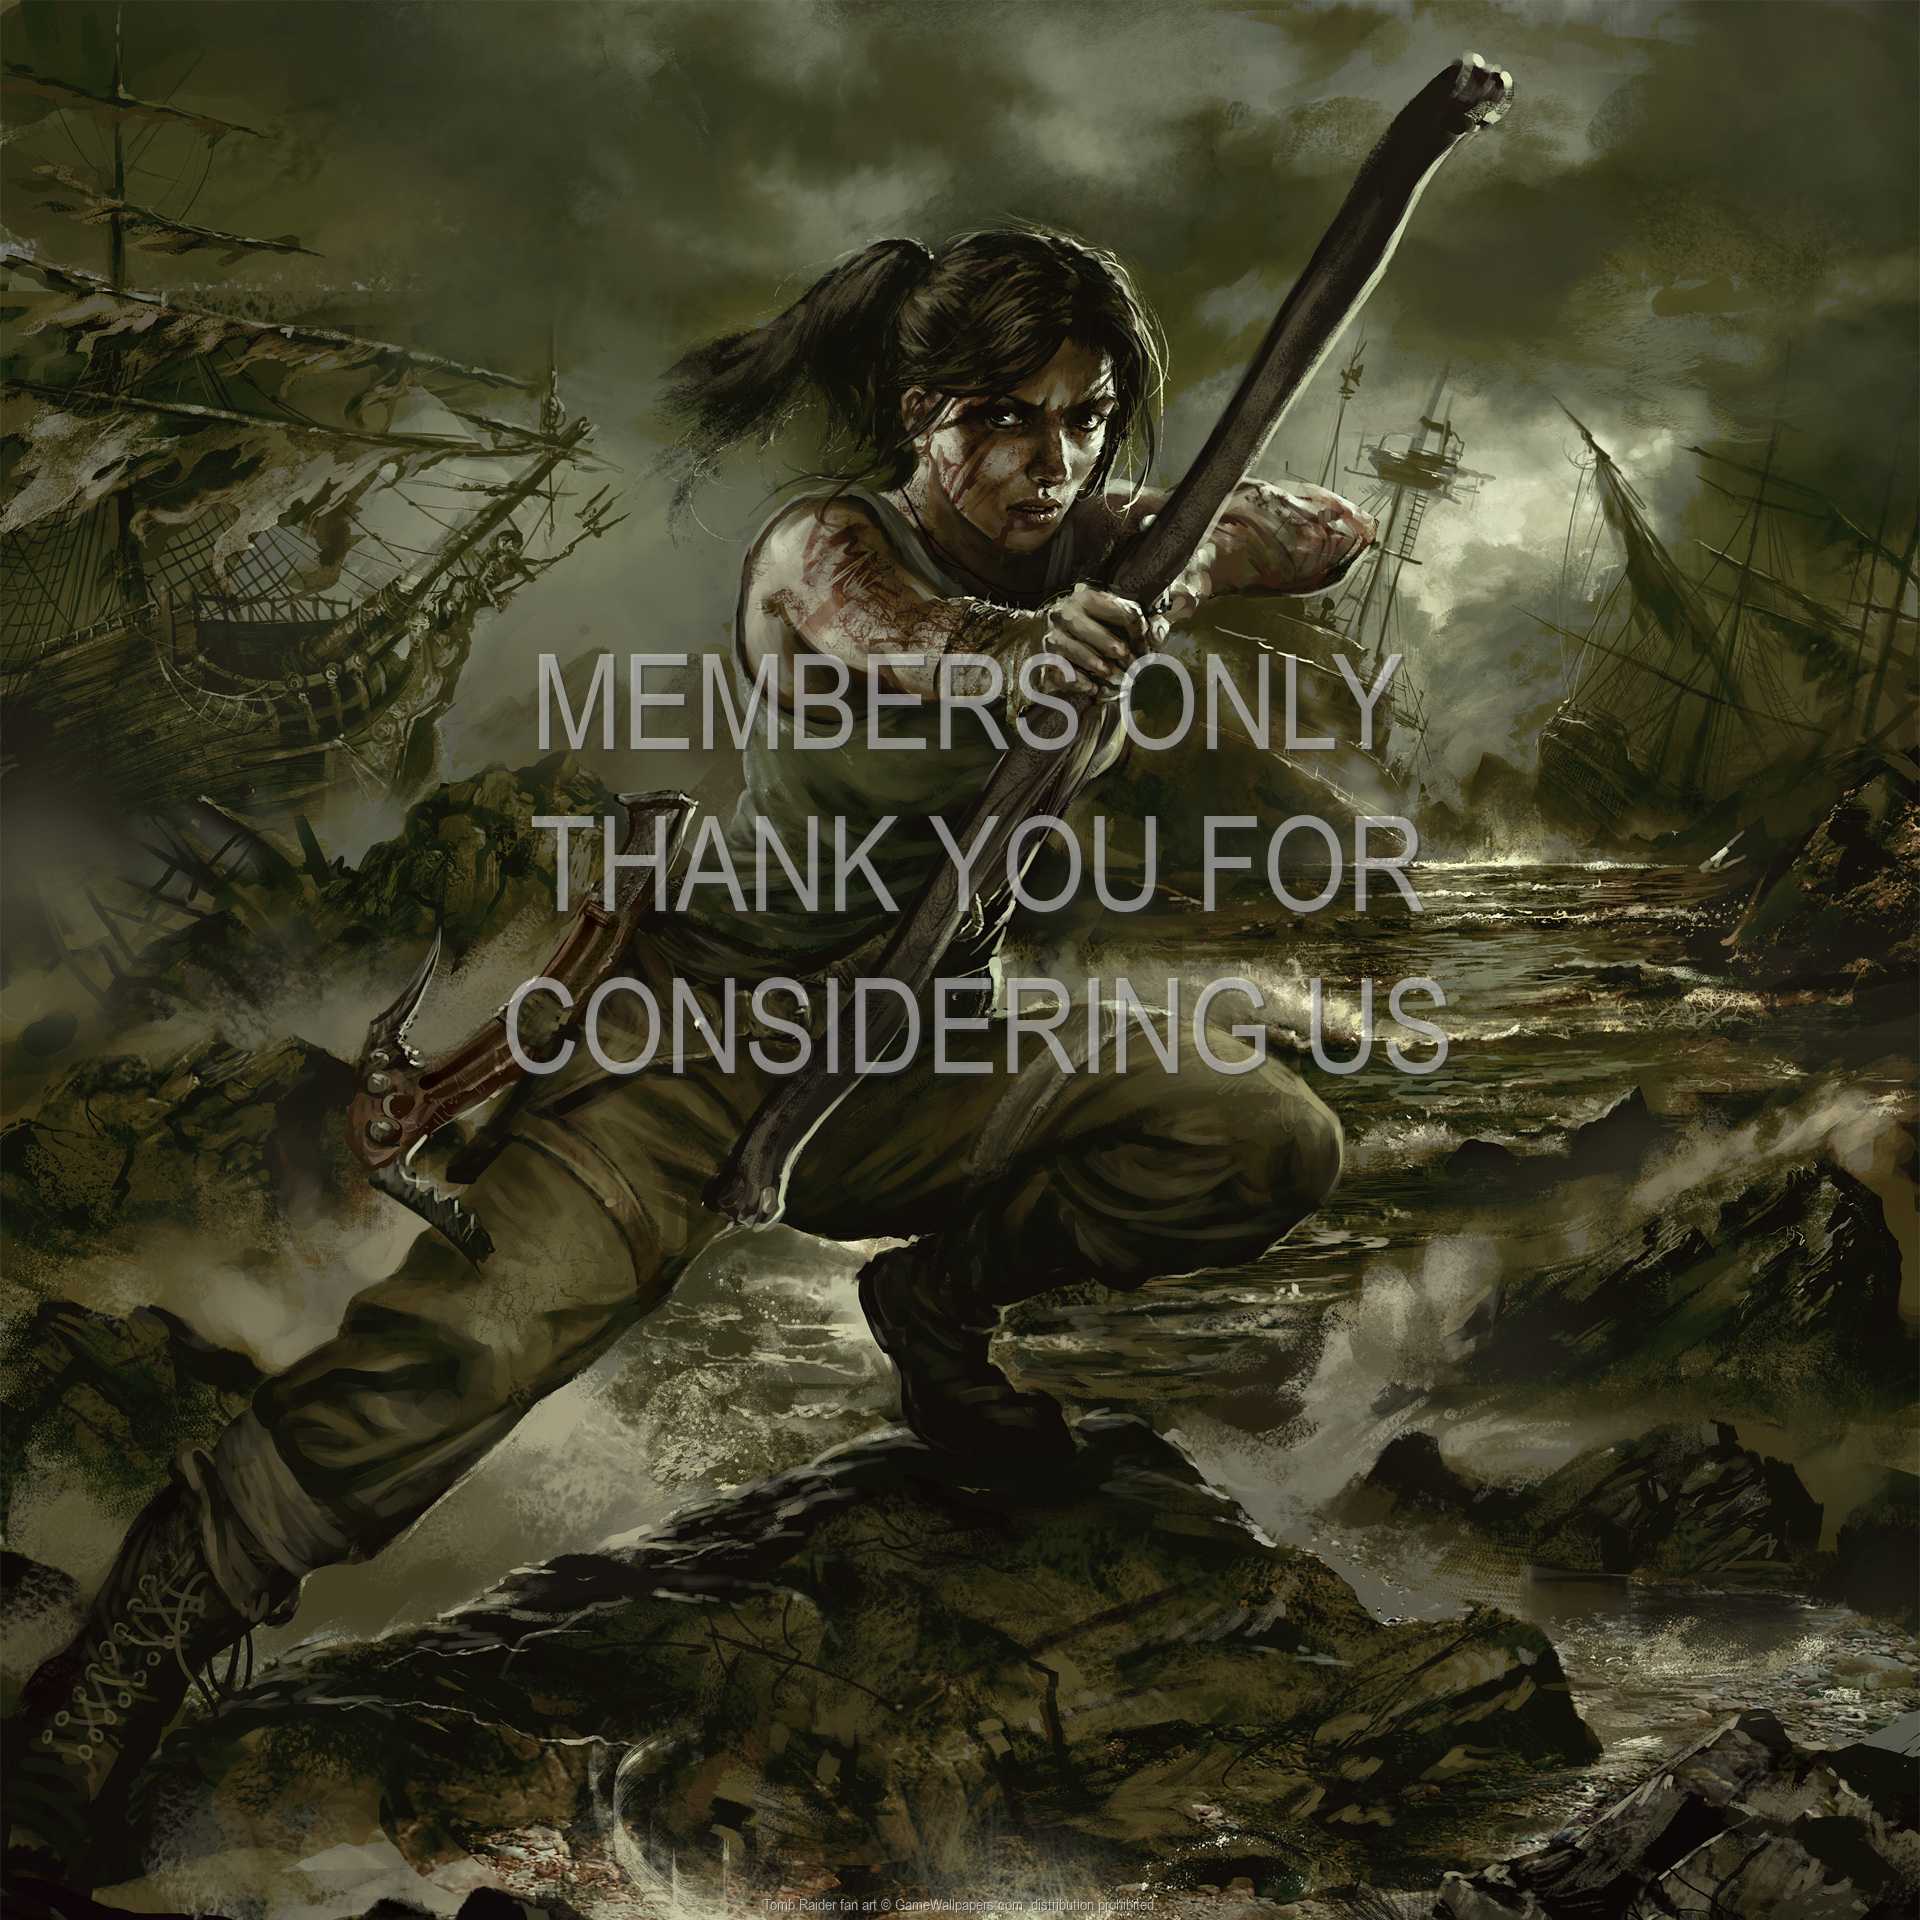 Tomb Raider fan art 1080p Horizontal Mobile wallpaper or background 08